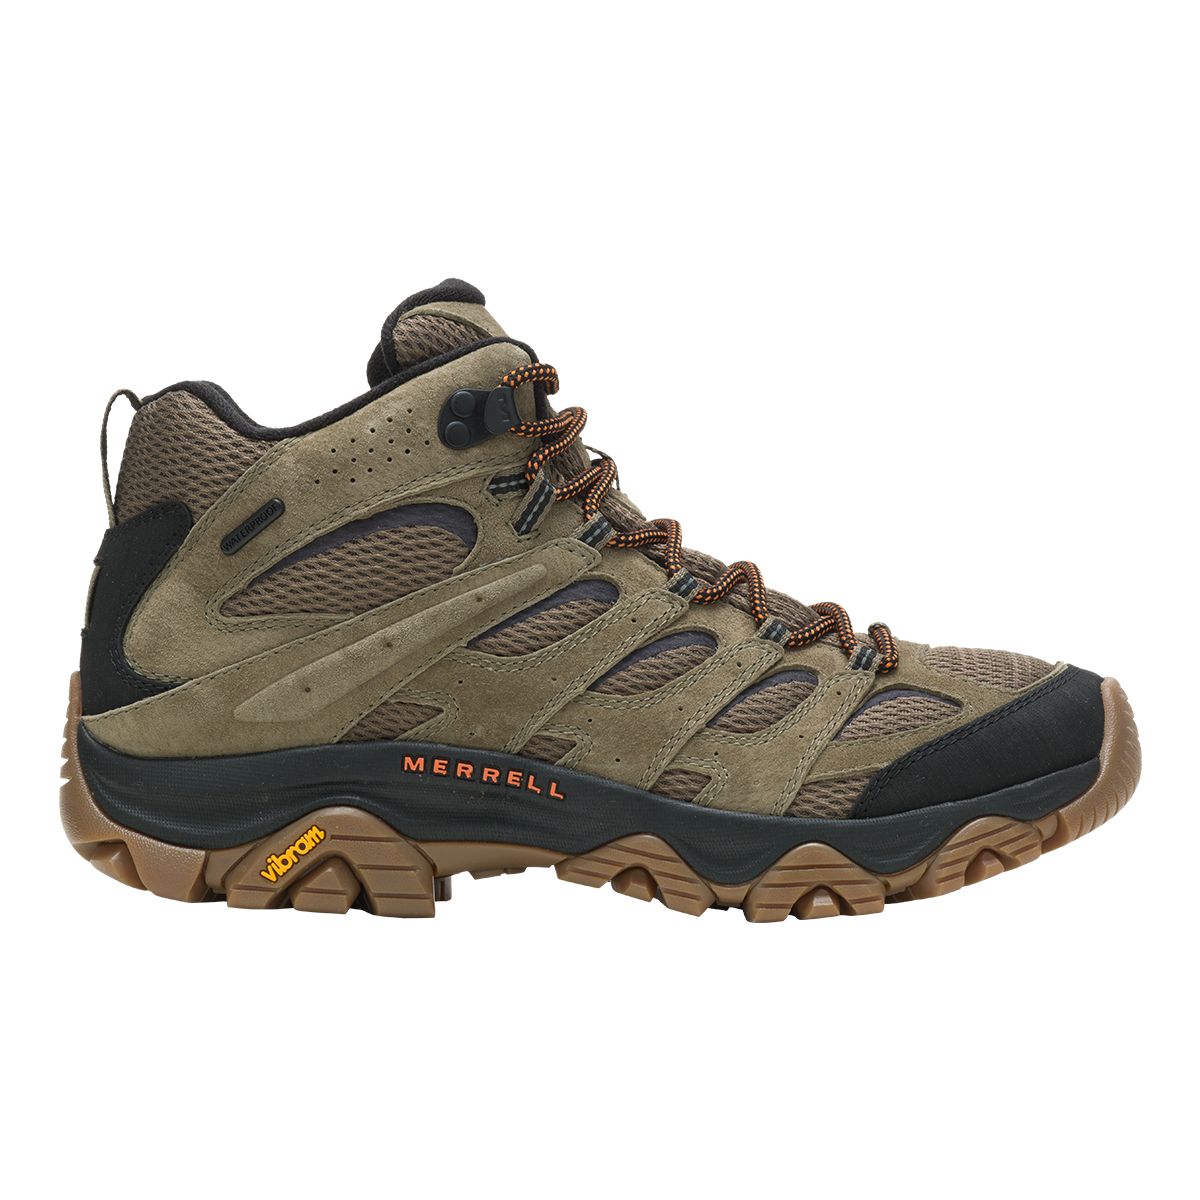 Merrell Men's Moab Hiking Boots Waterproof